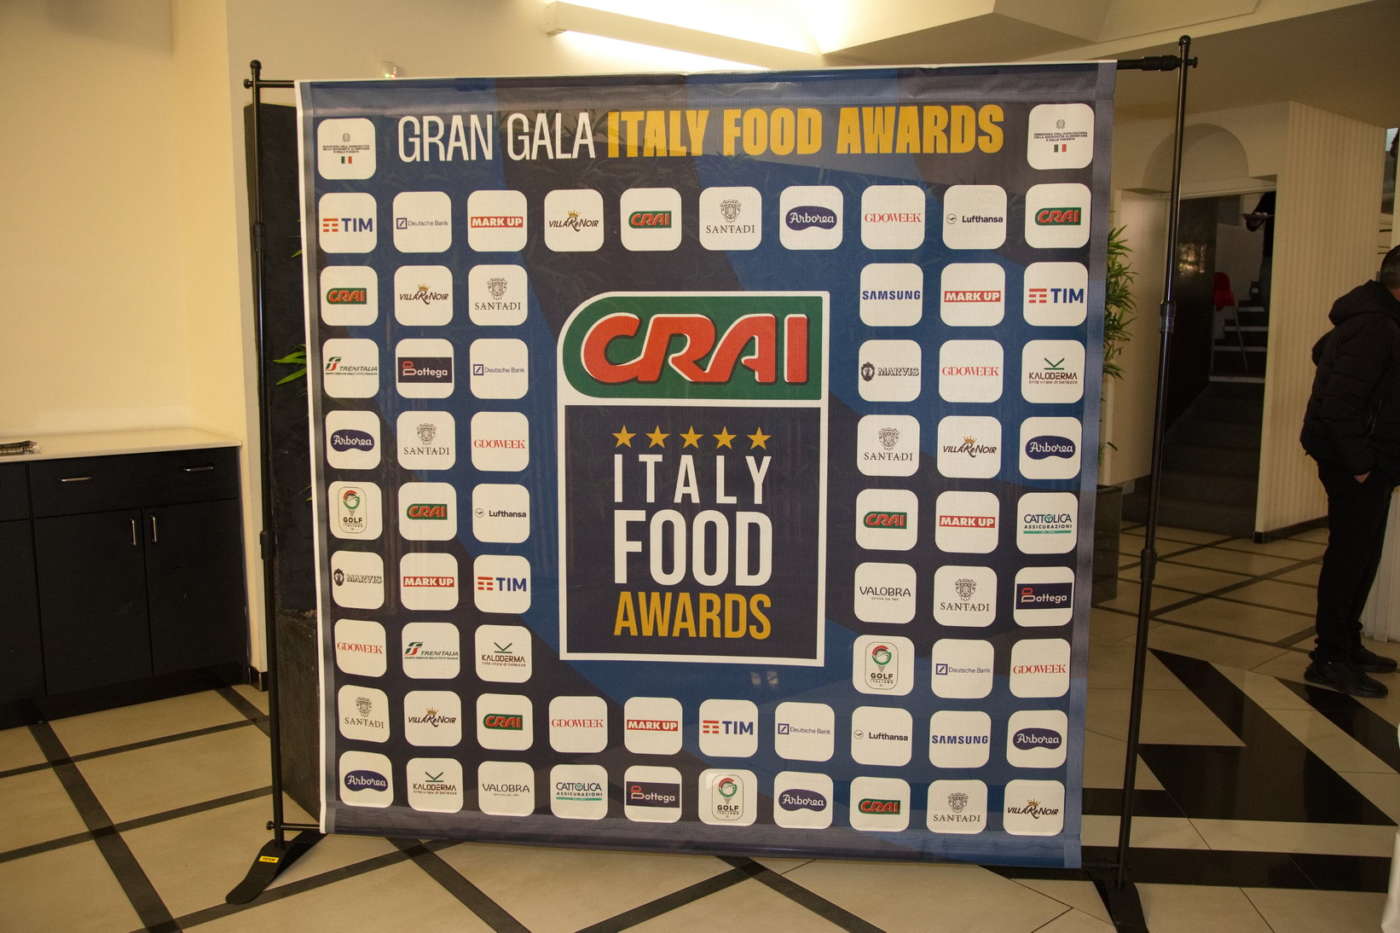 Crai Italy Food Awards premia le eccellenze agroalimentari italiane